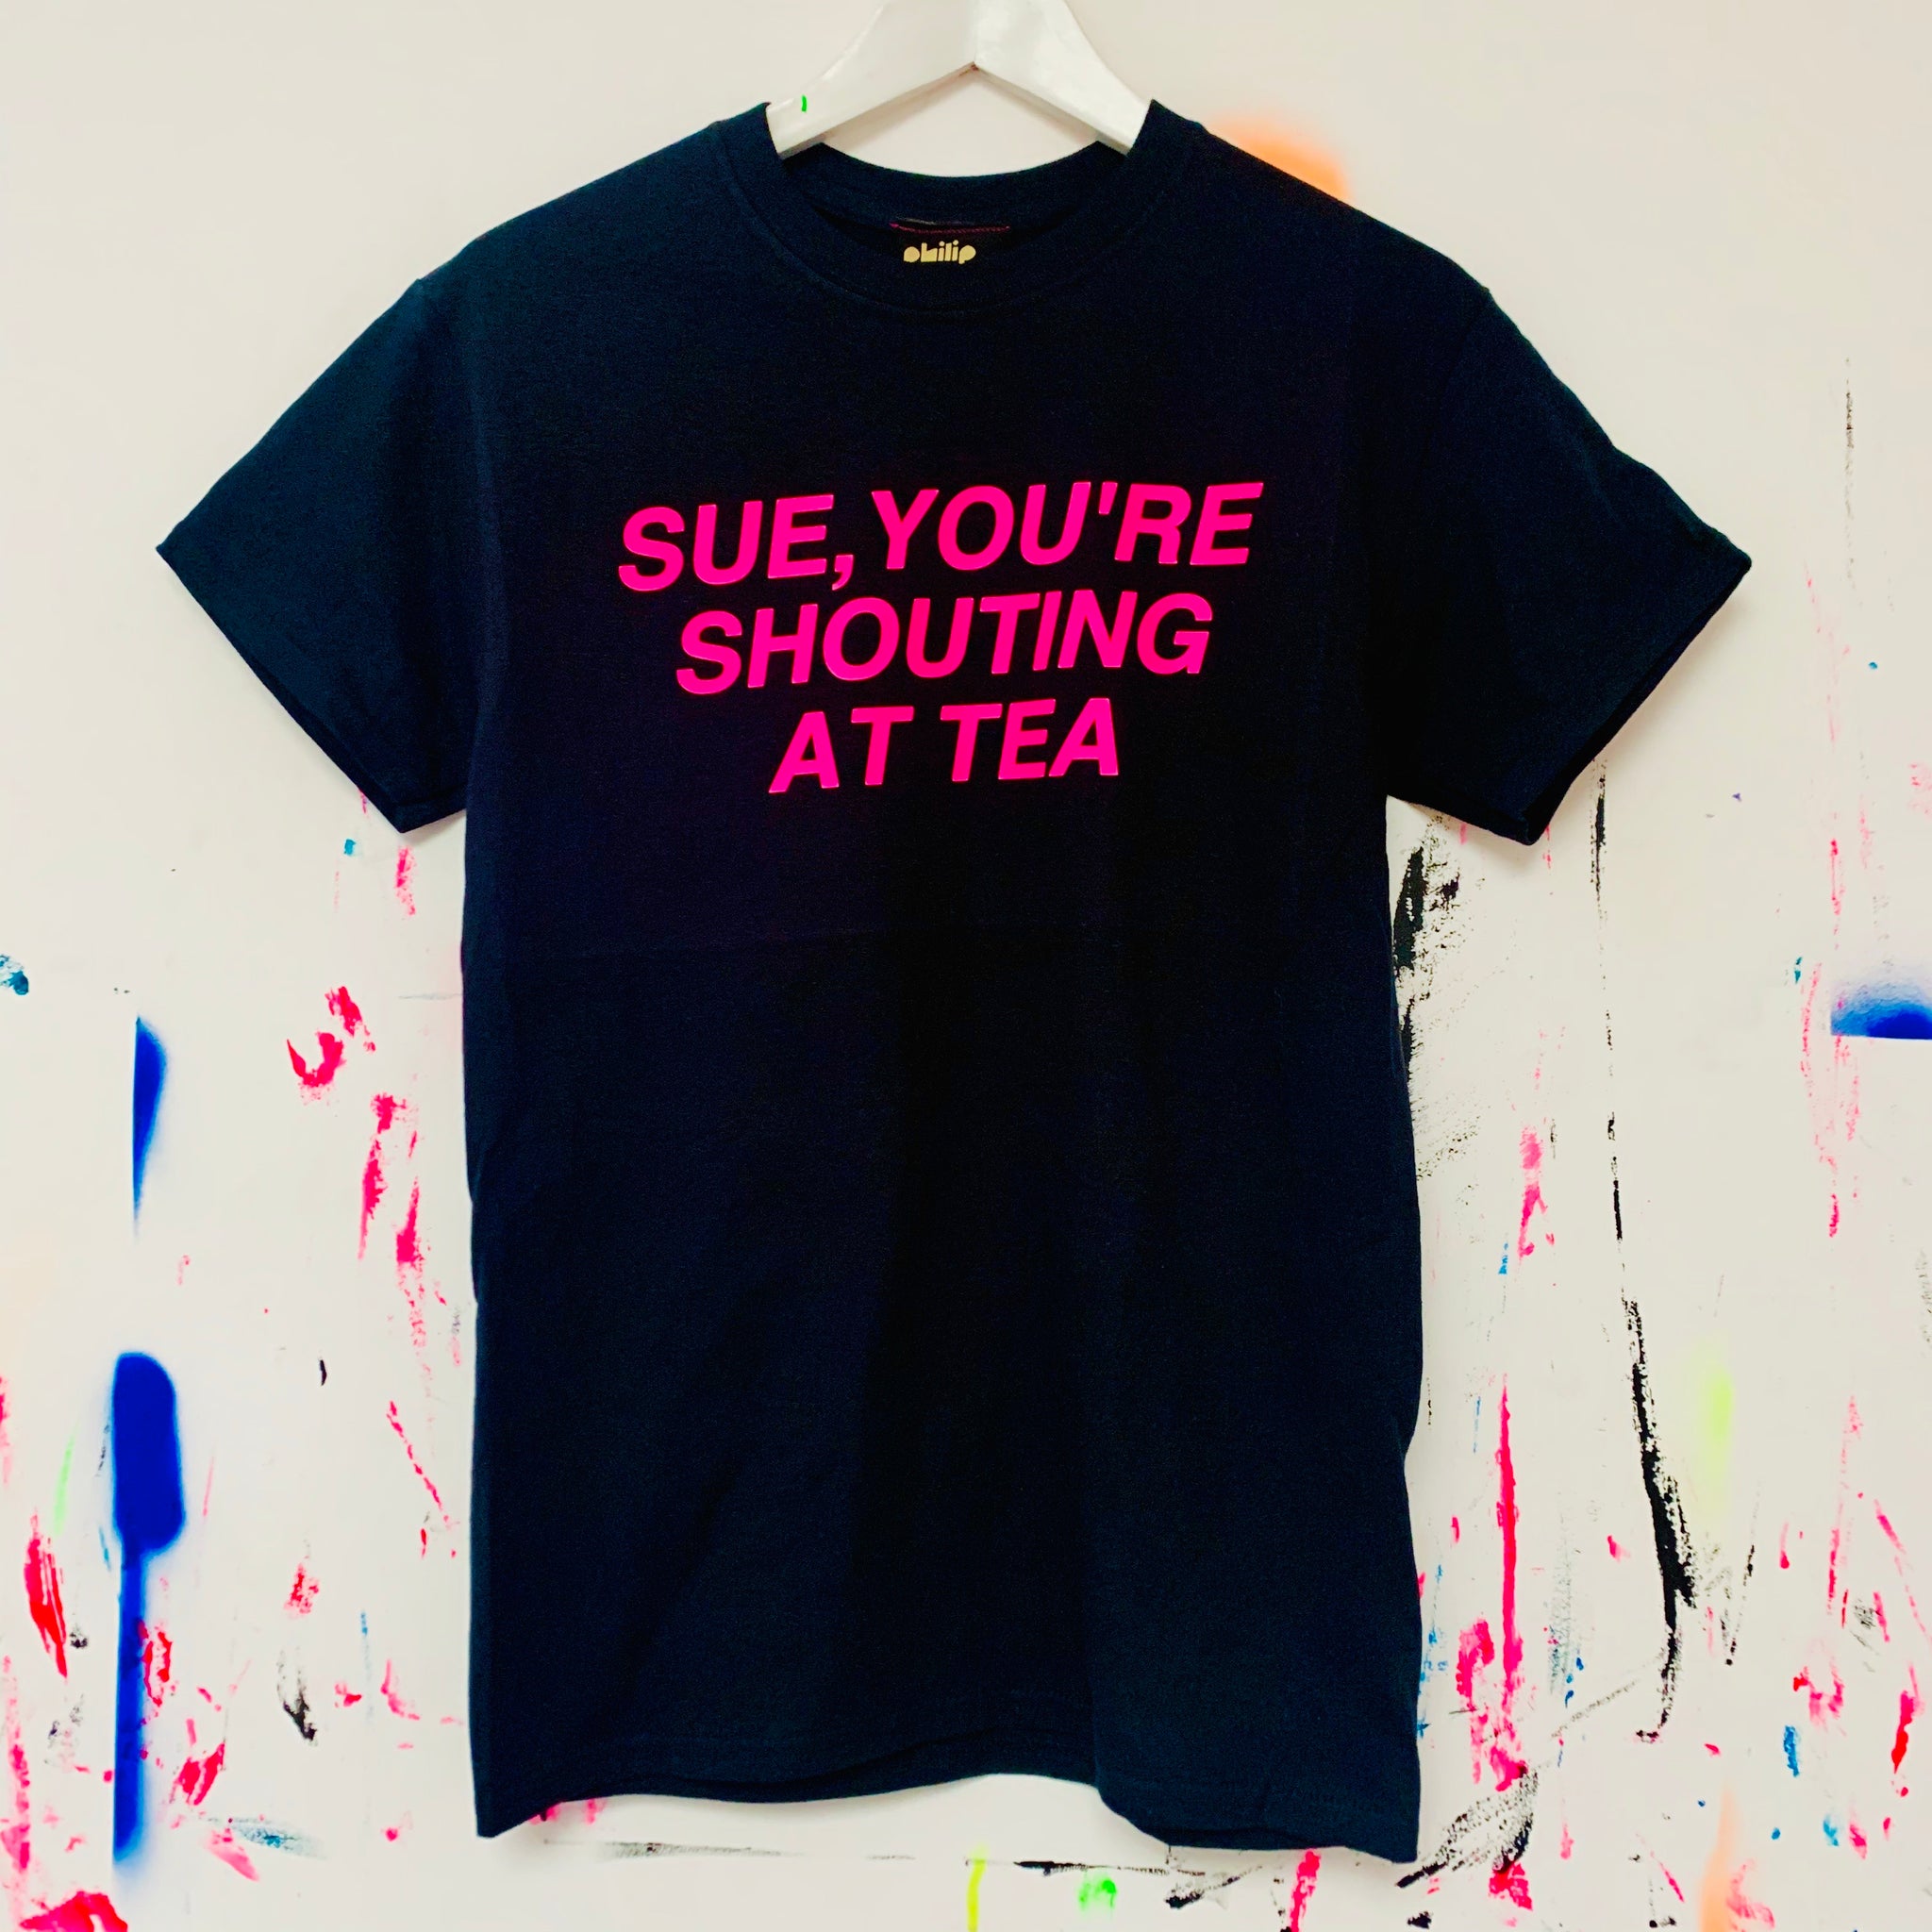 Sue, you’re shouting at tea T-Shirt